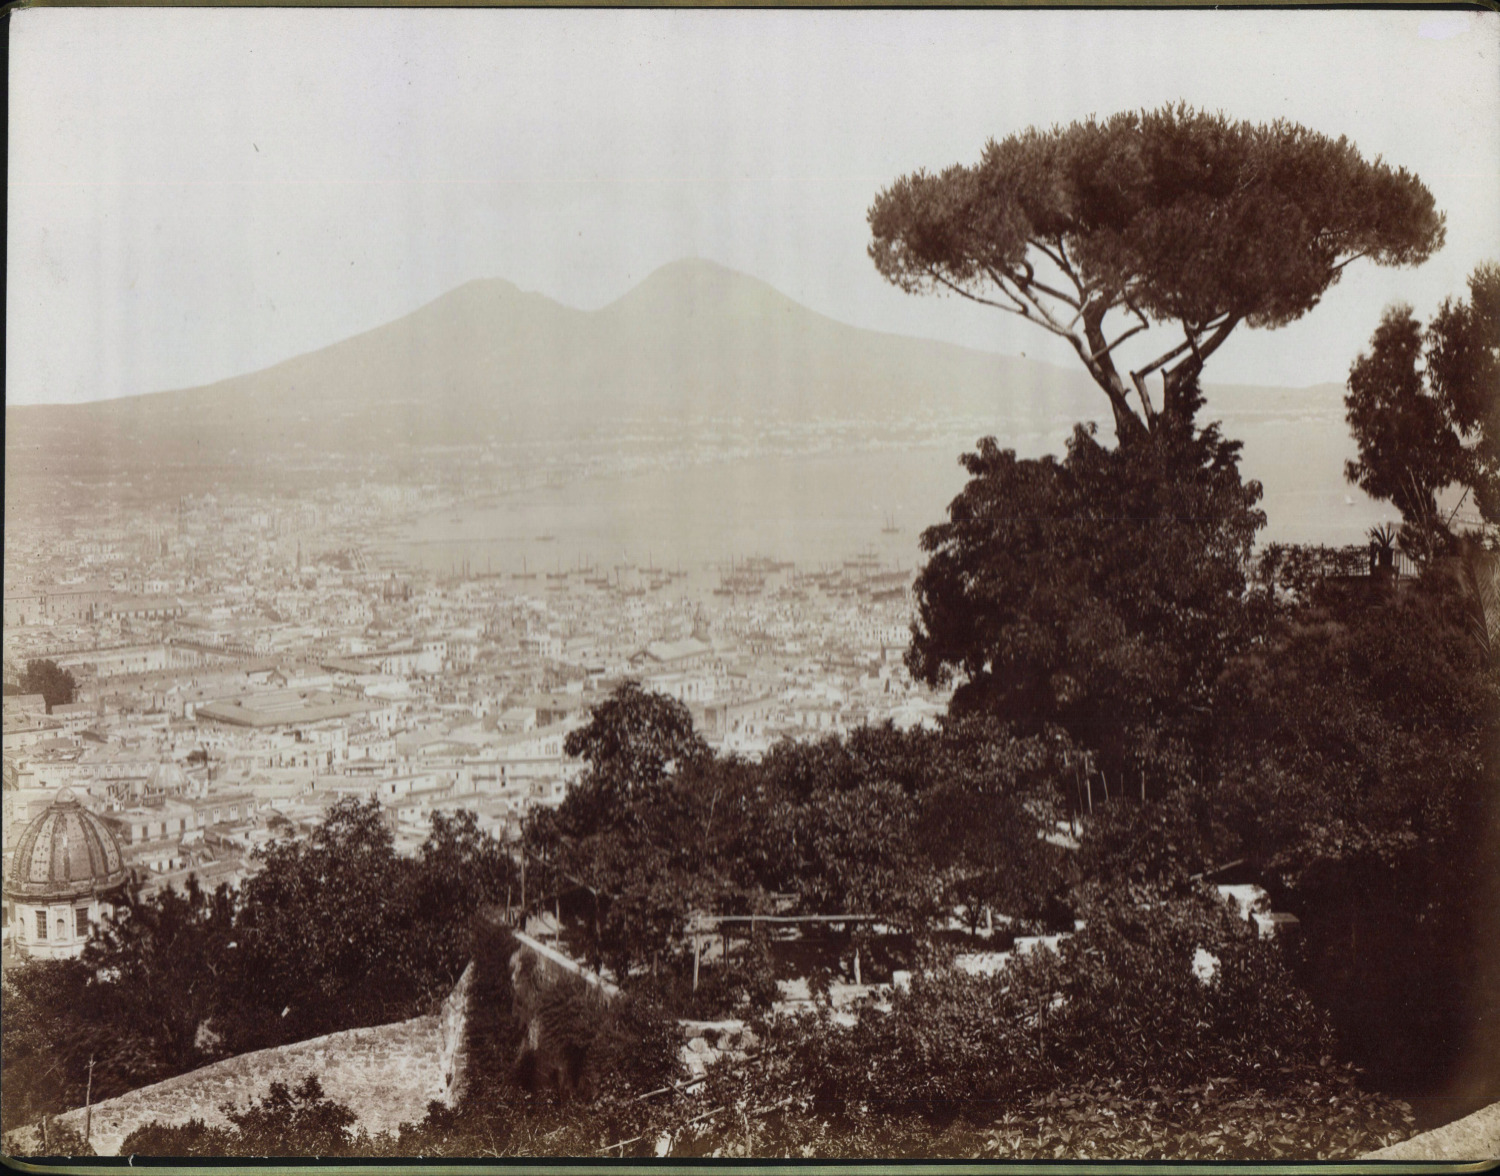 Giorgio Sommer, Italy, Naples, Panorama da San Martino, vintage albumine print 